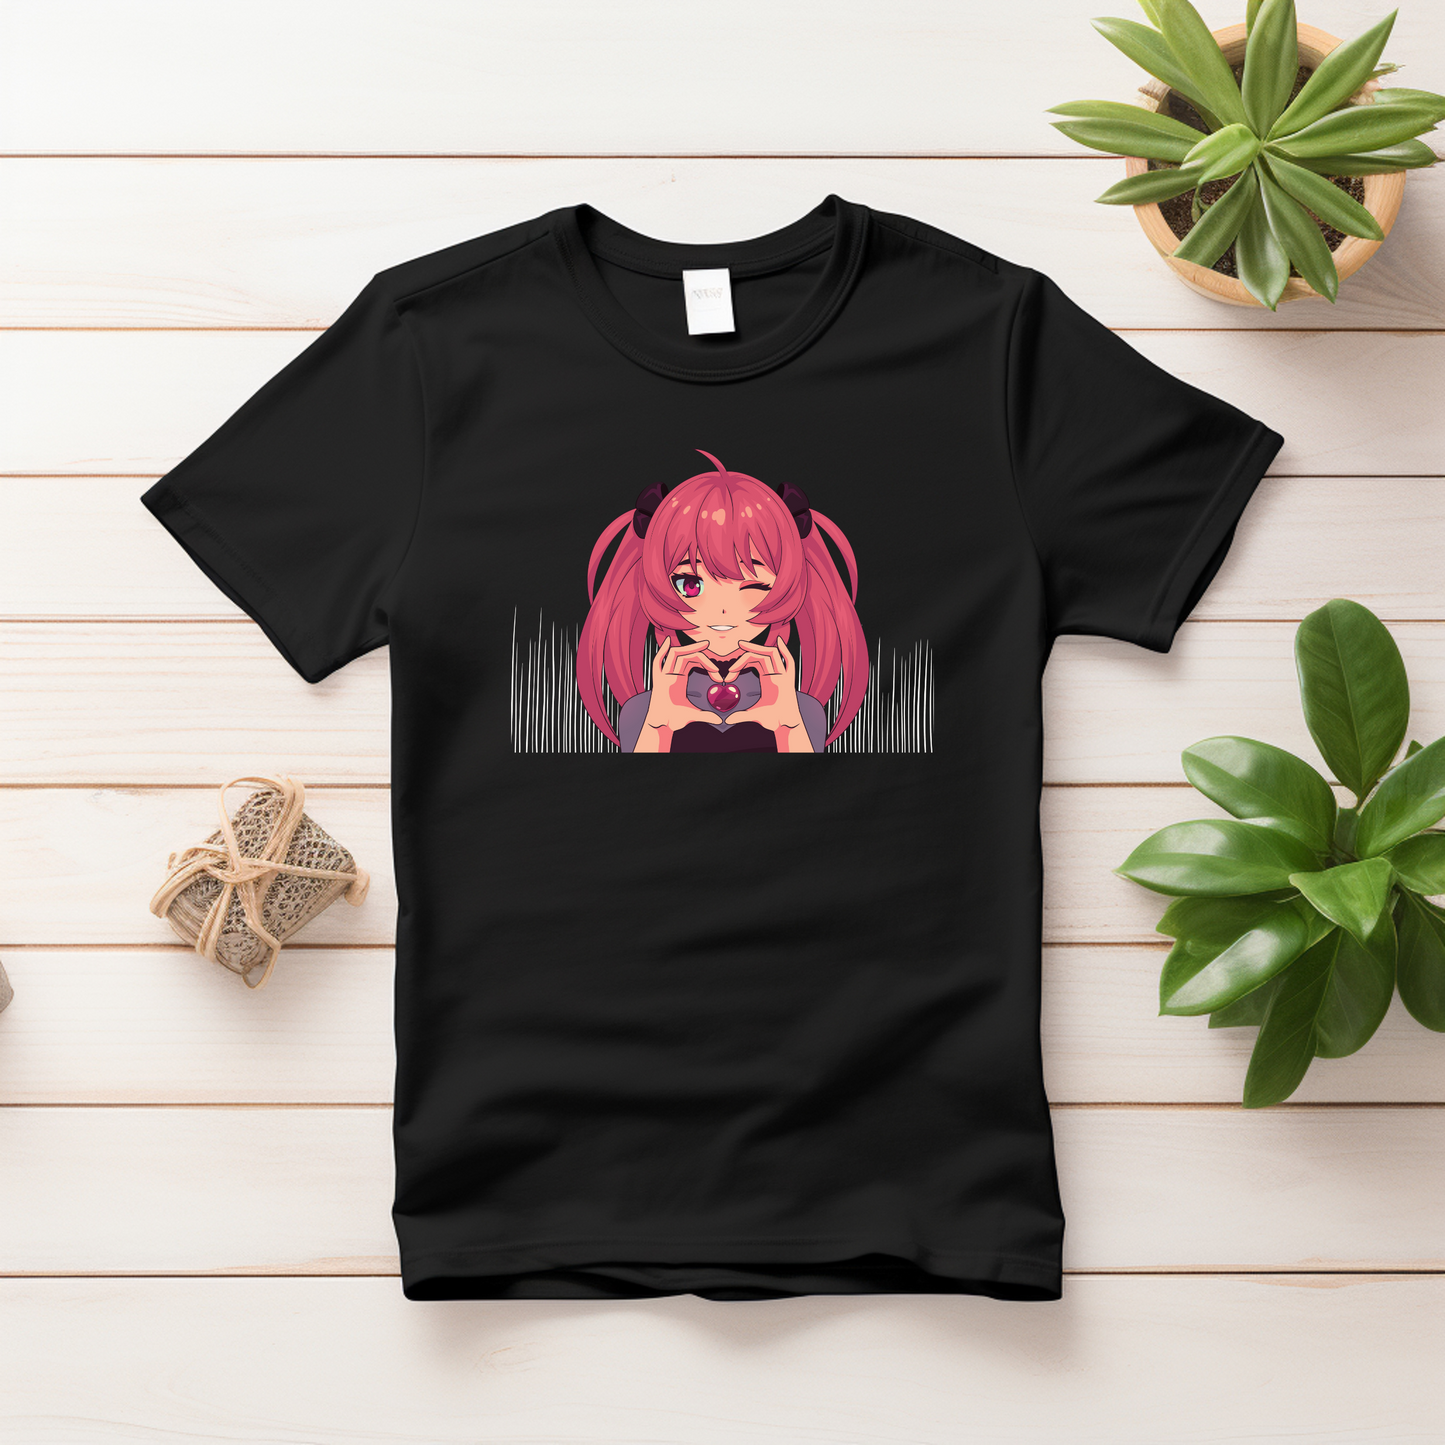 Girls Graphic Printed T-shirt- Black